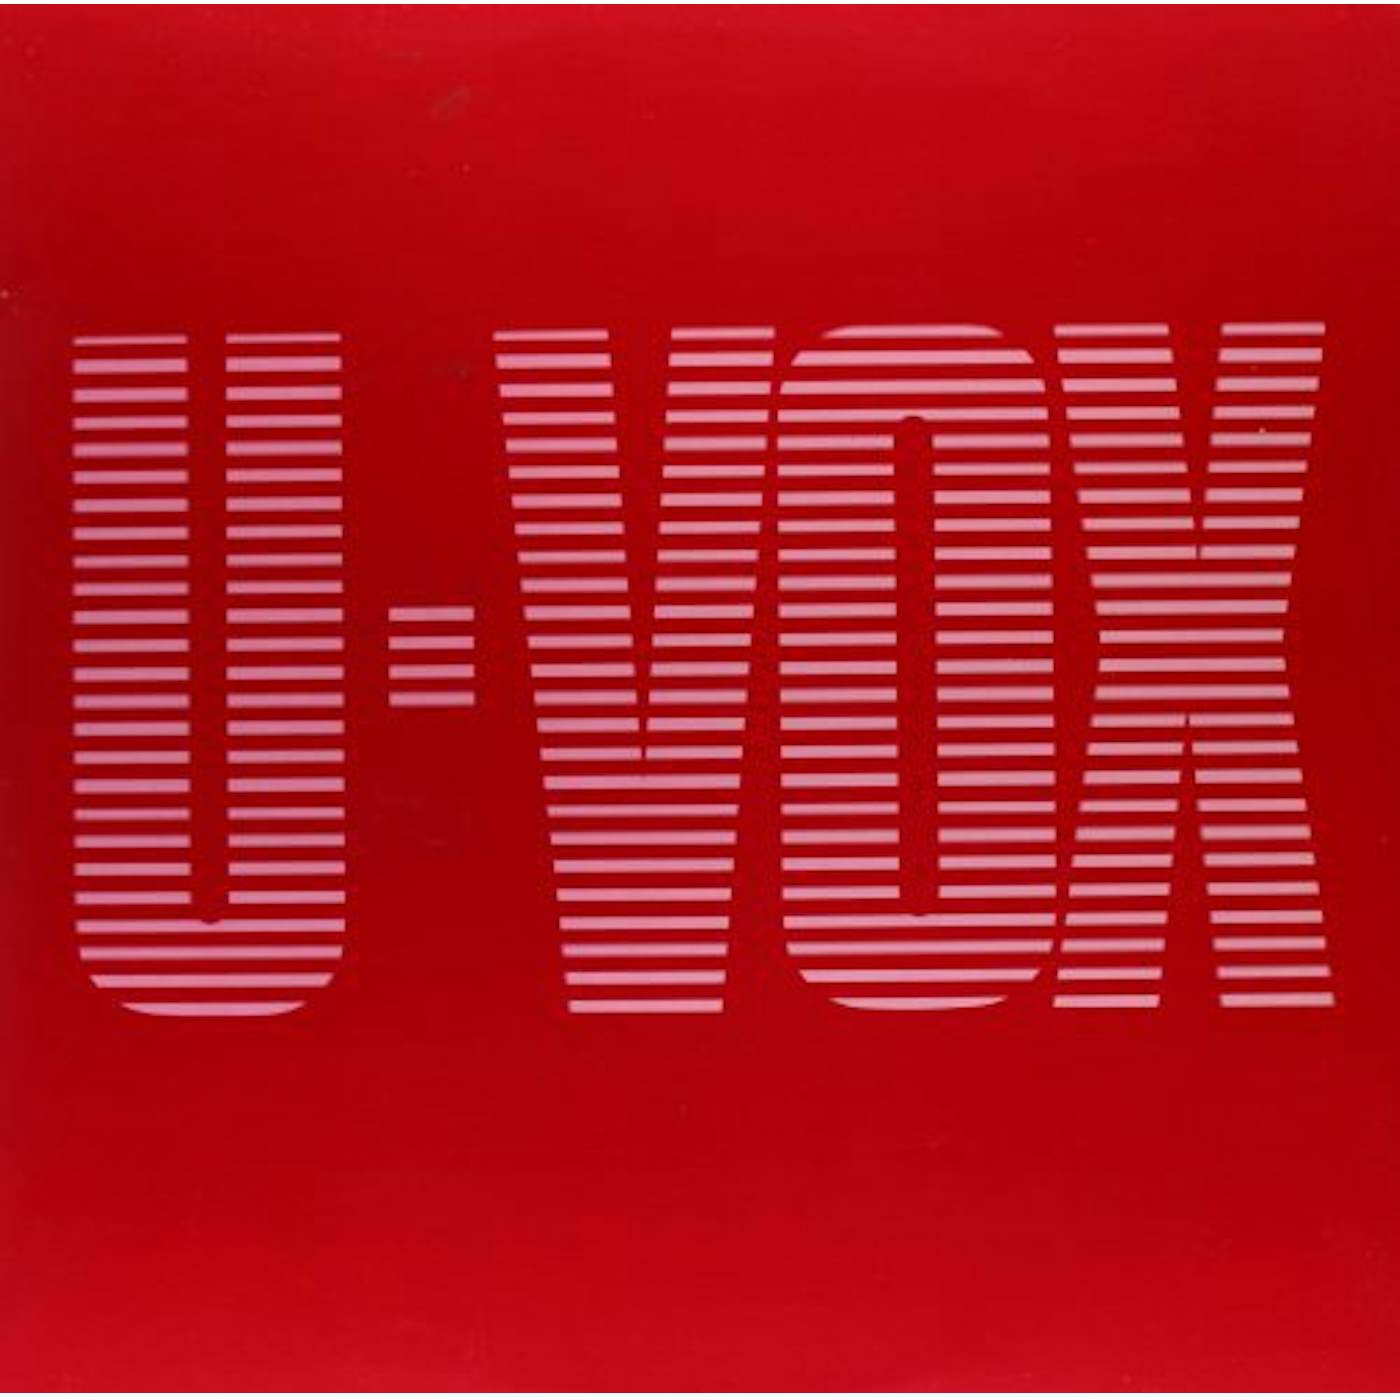 Ultravox U-Vox Vinyl Record